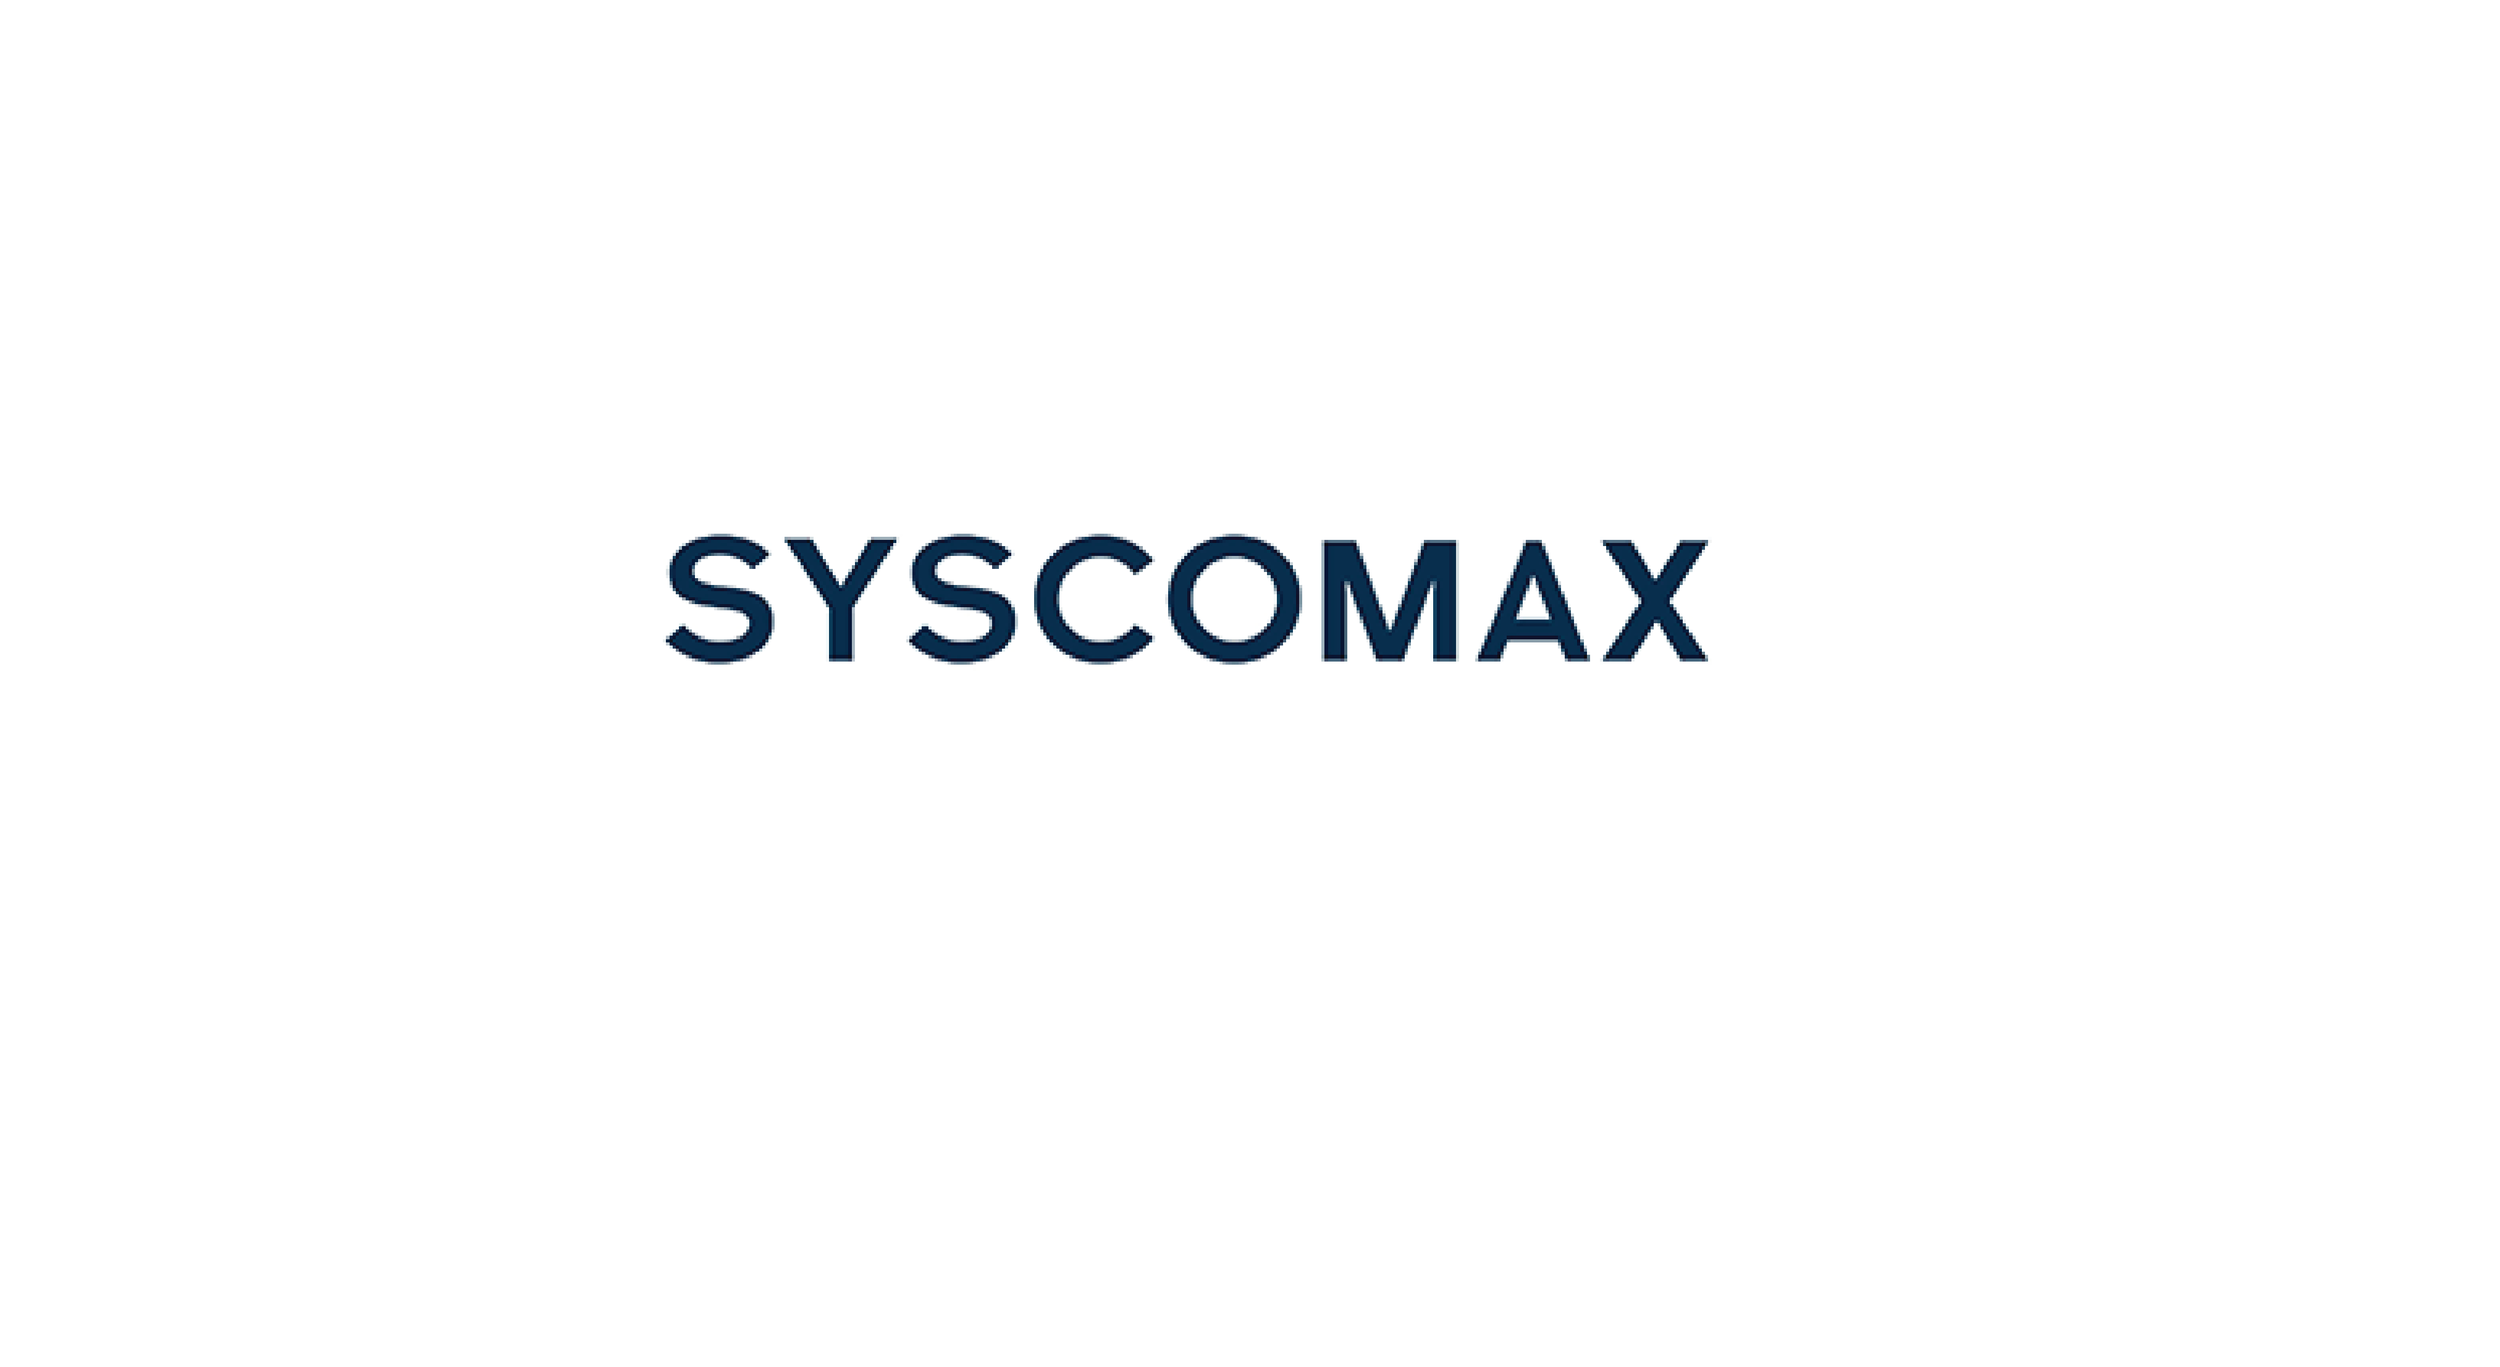 syscomax logo.png